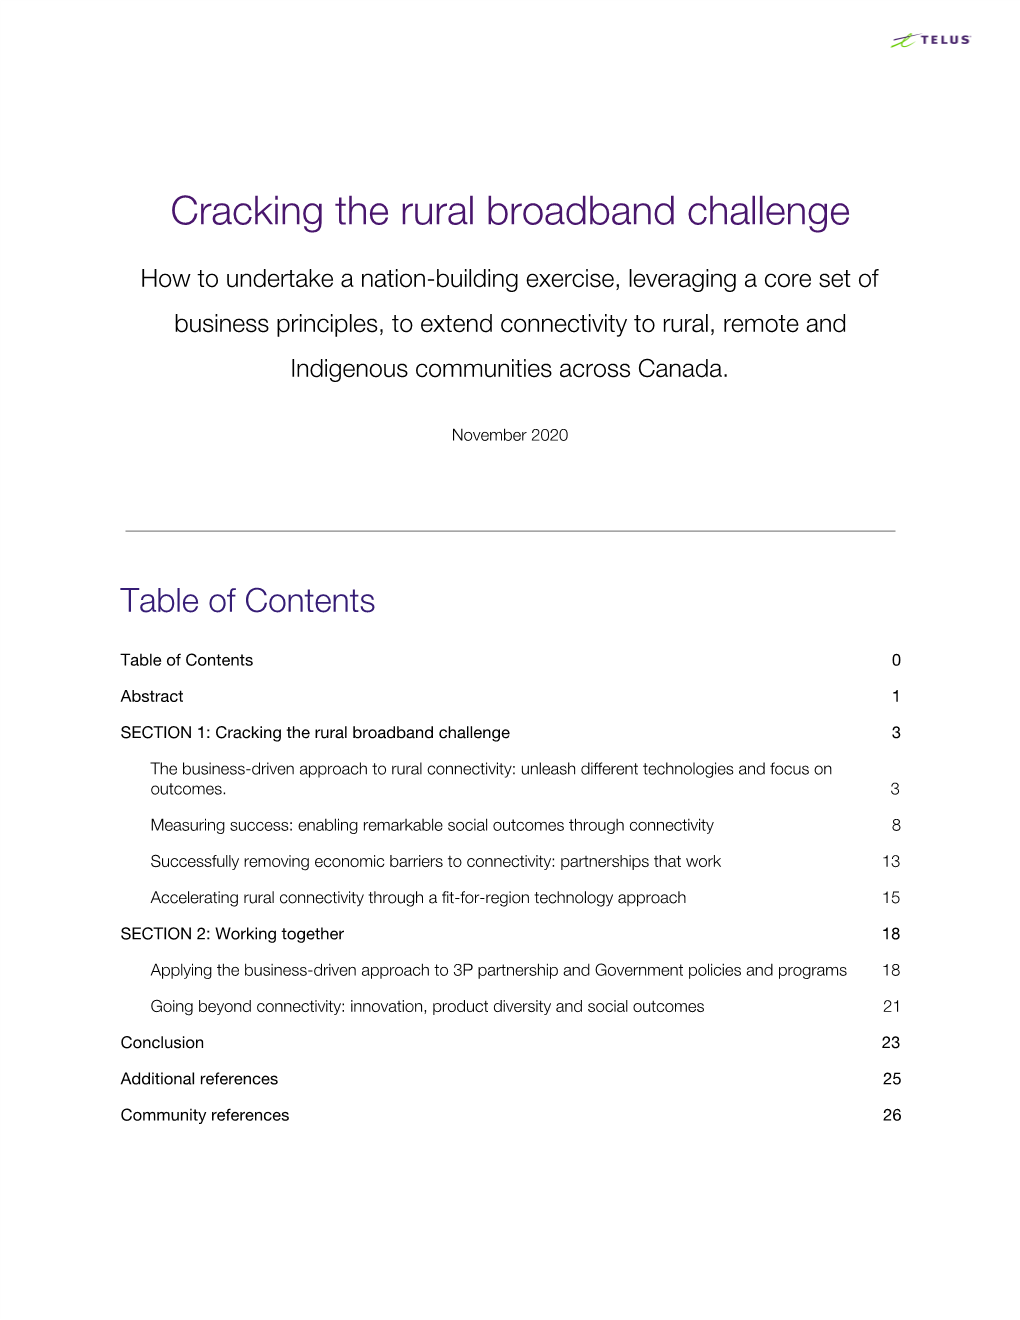 Cracking the Rural Broadband Challenge